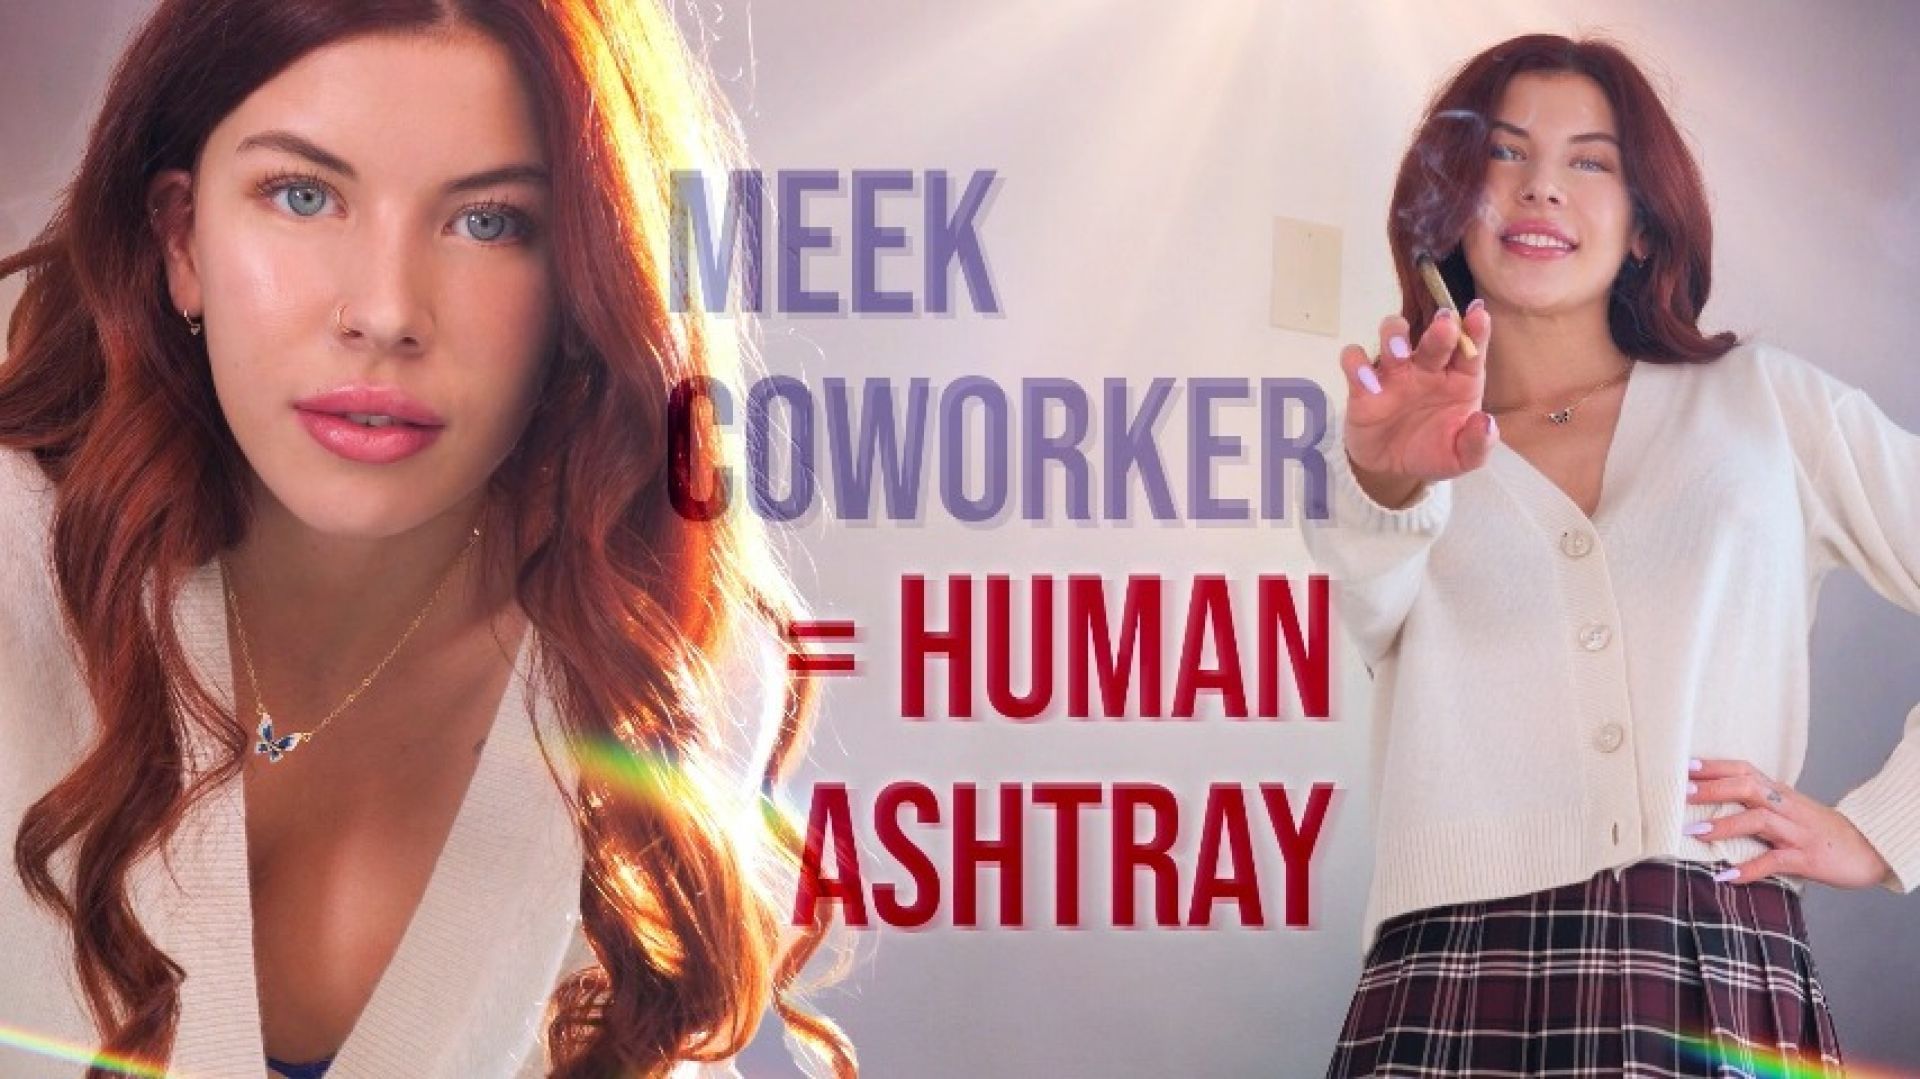 Meek Coworker = Human Ashtray